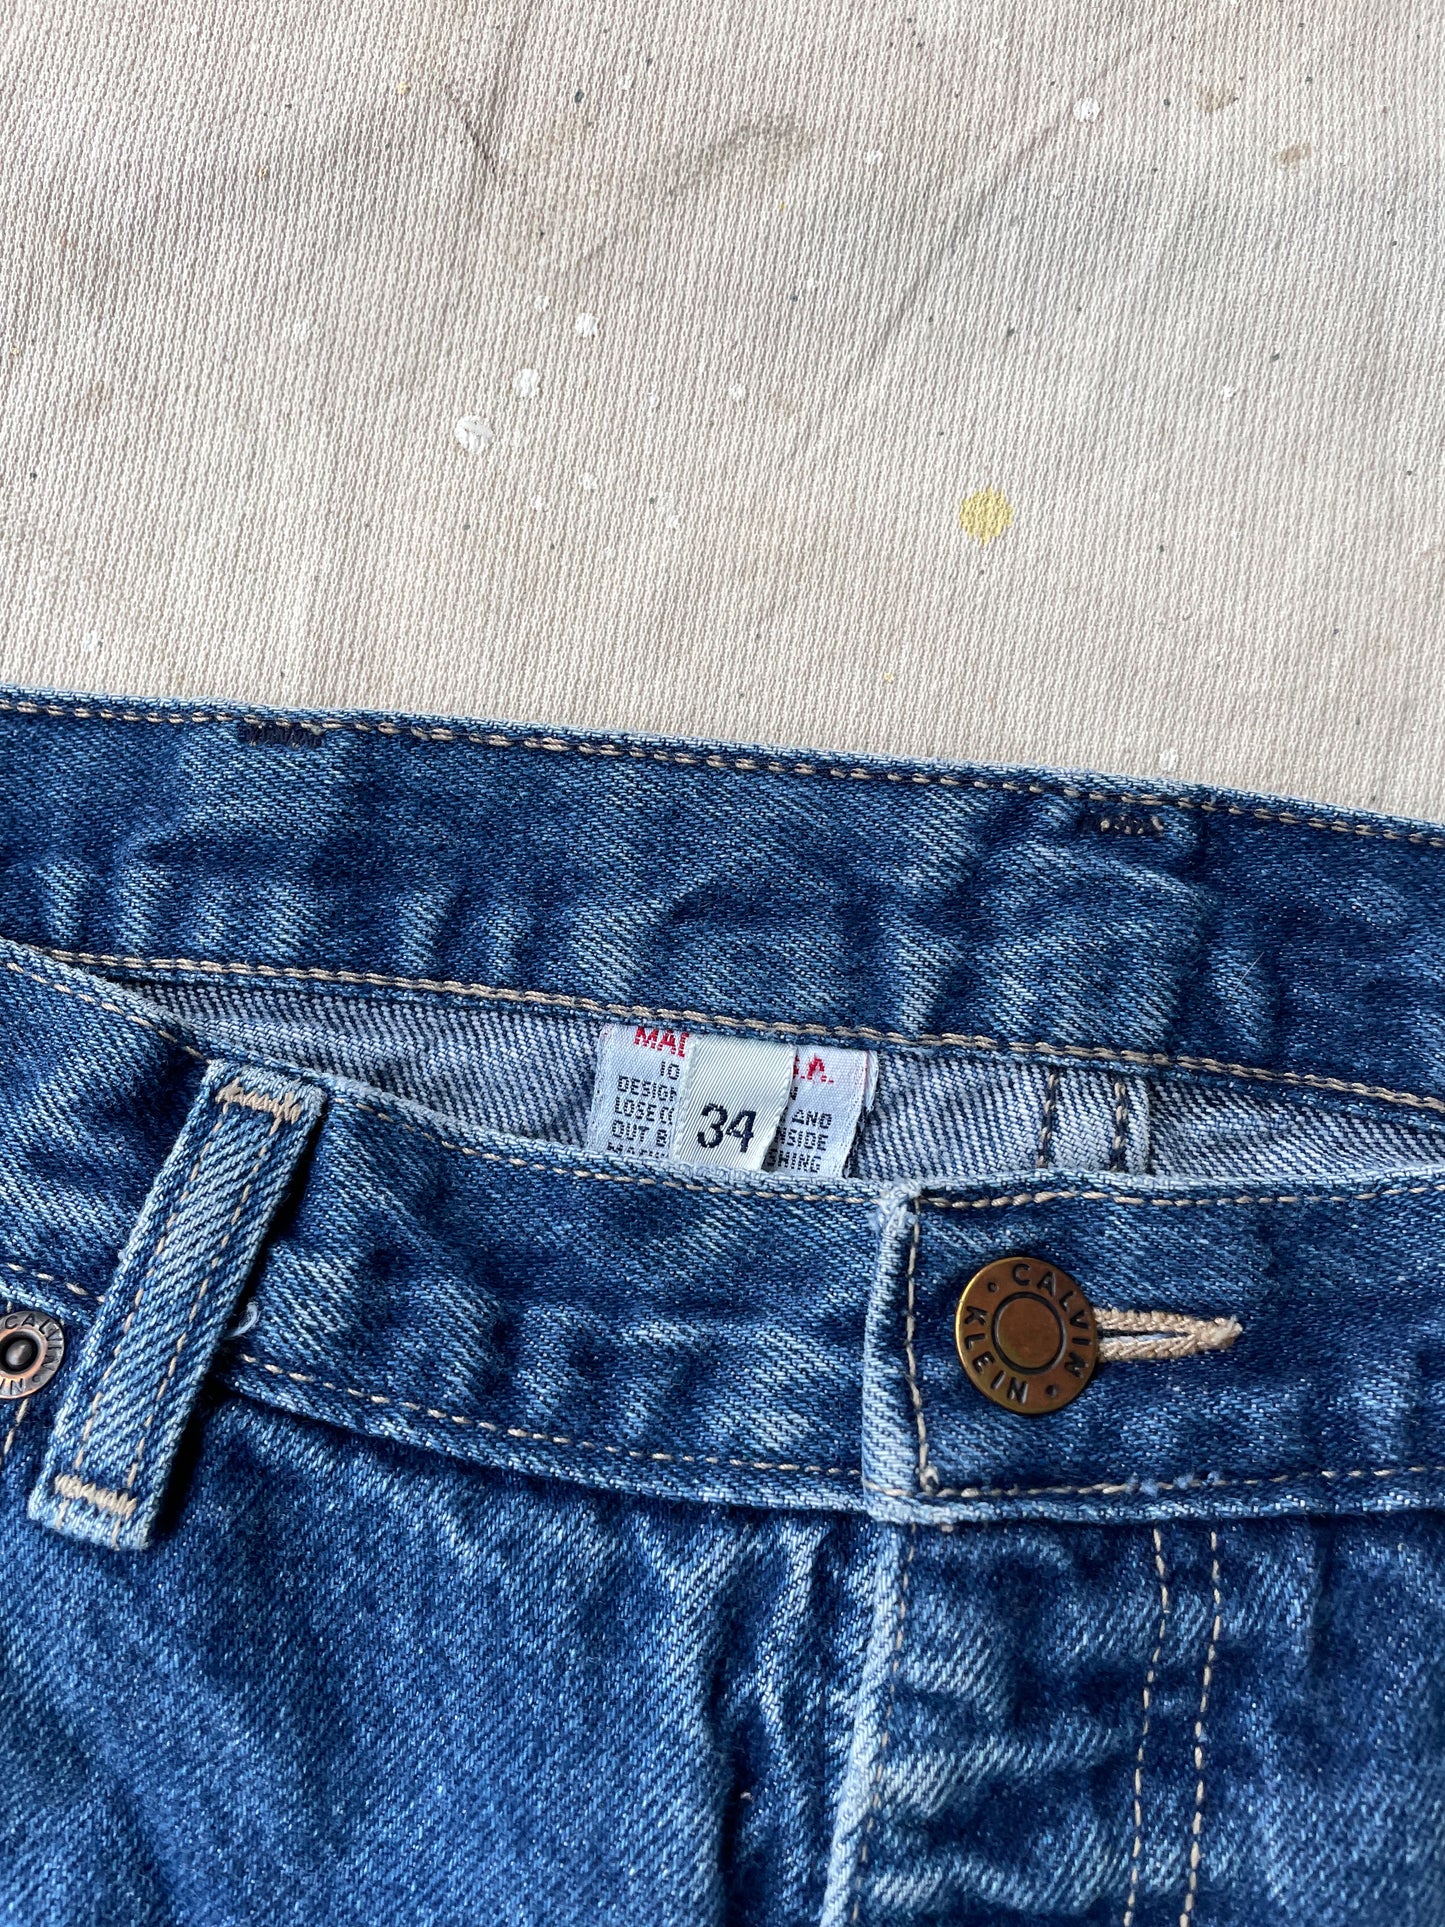 80's Calvin Klein Jeans—[32x30]